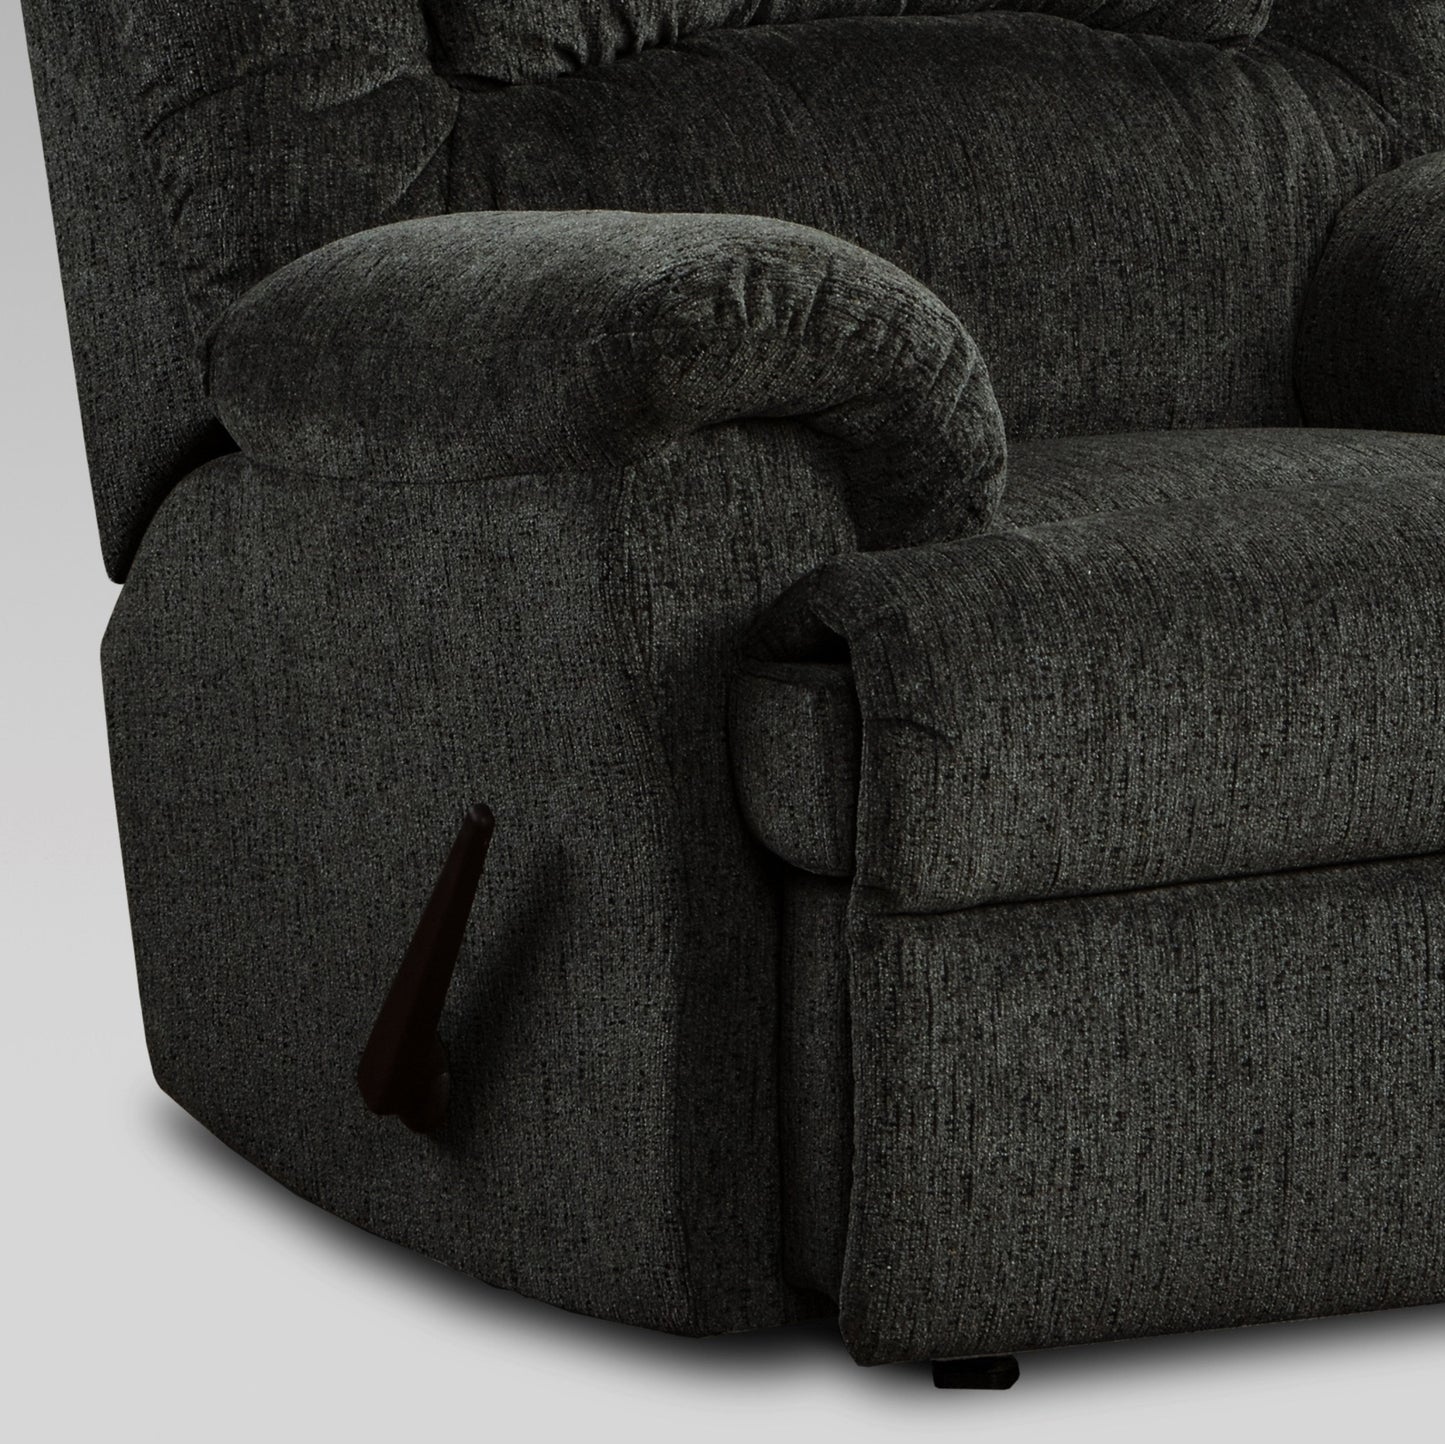 Dual Reclining Microfiber Reclining Chair, Allure Grey